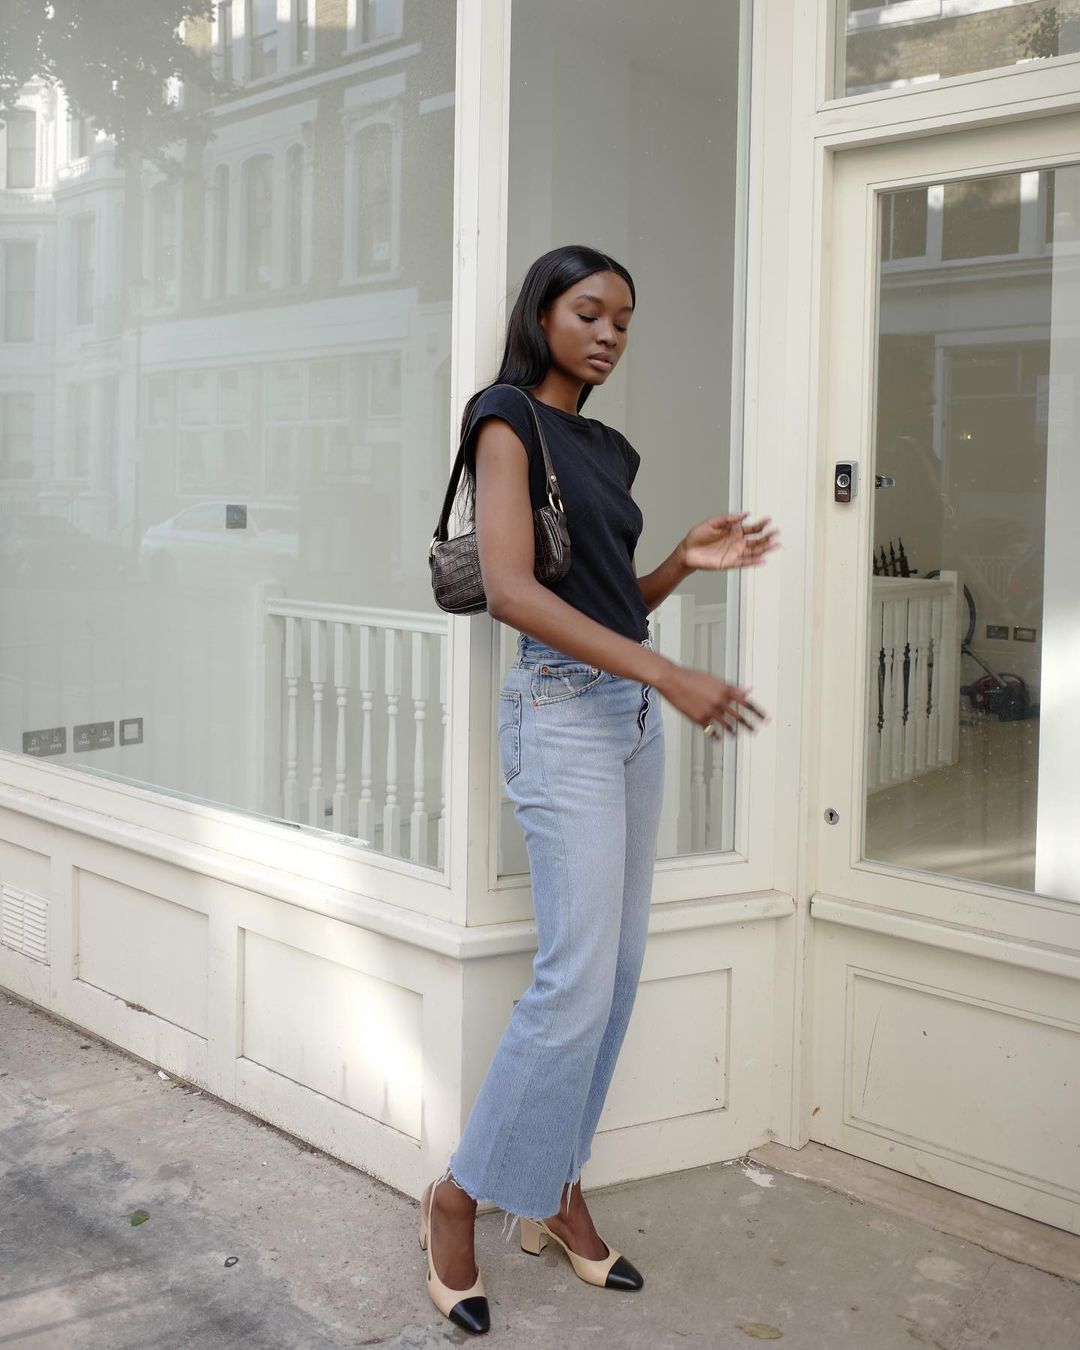 Casual Outfit Ideas: @natashandlovu wears jeans and a t-shirt